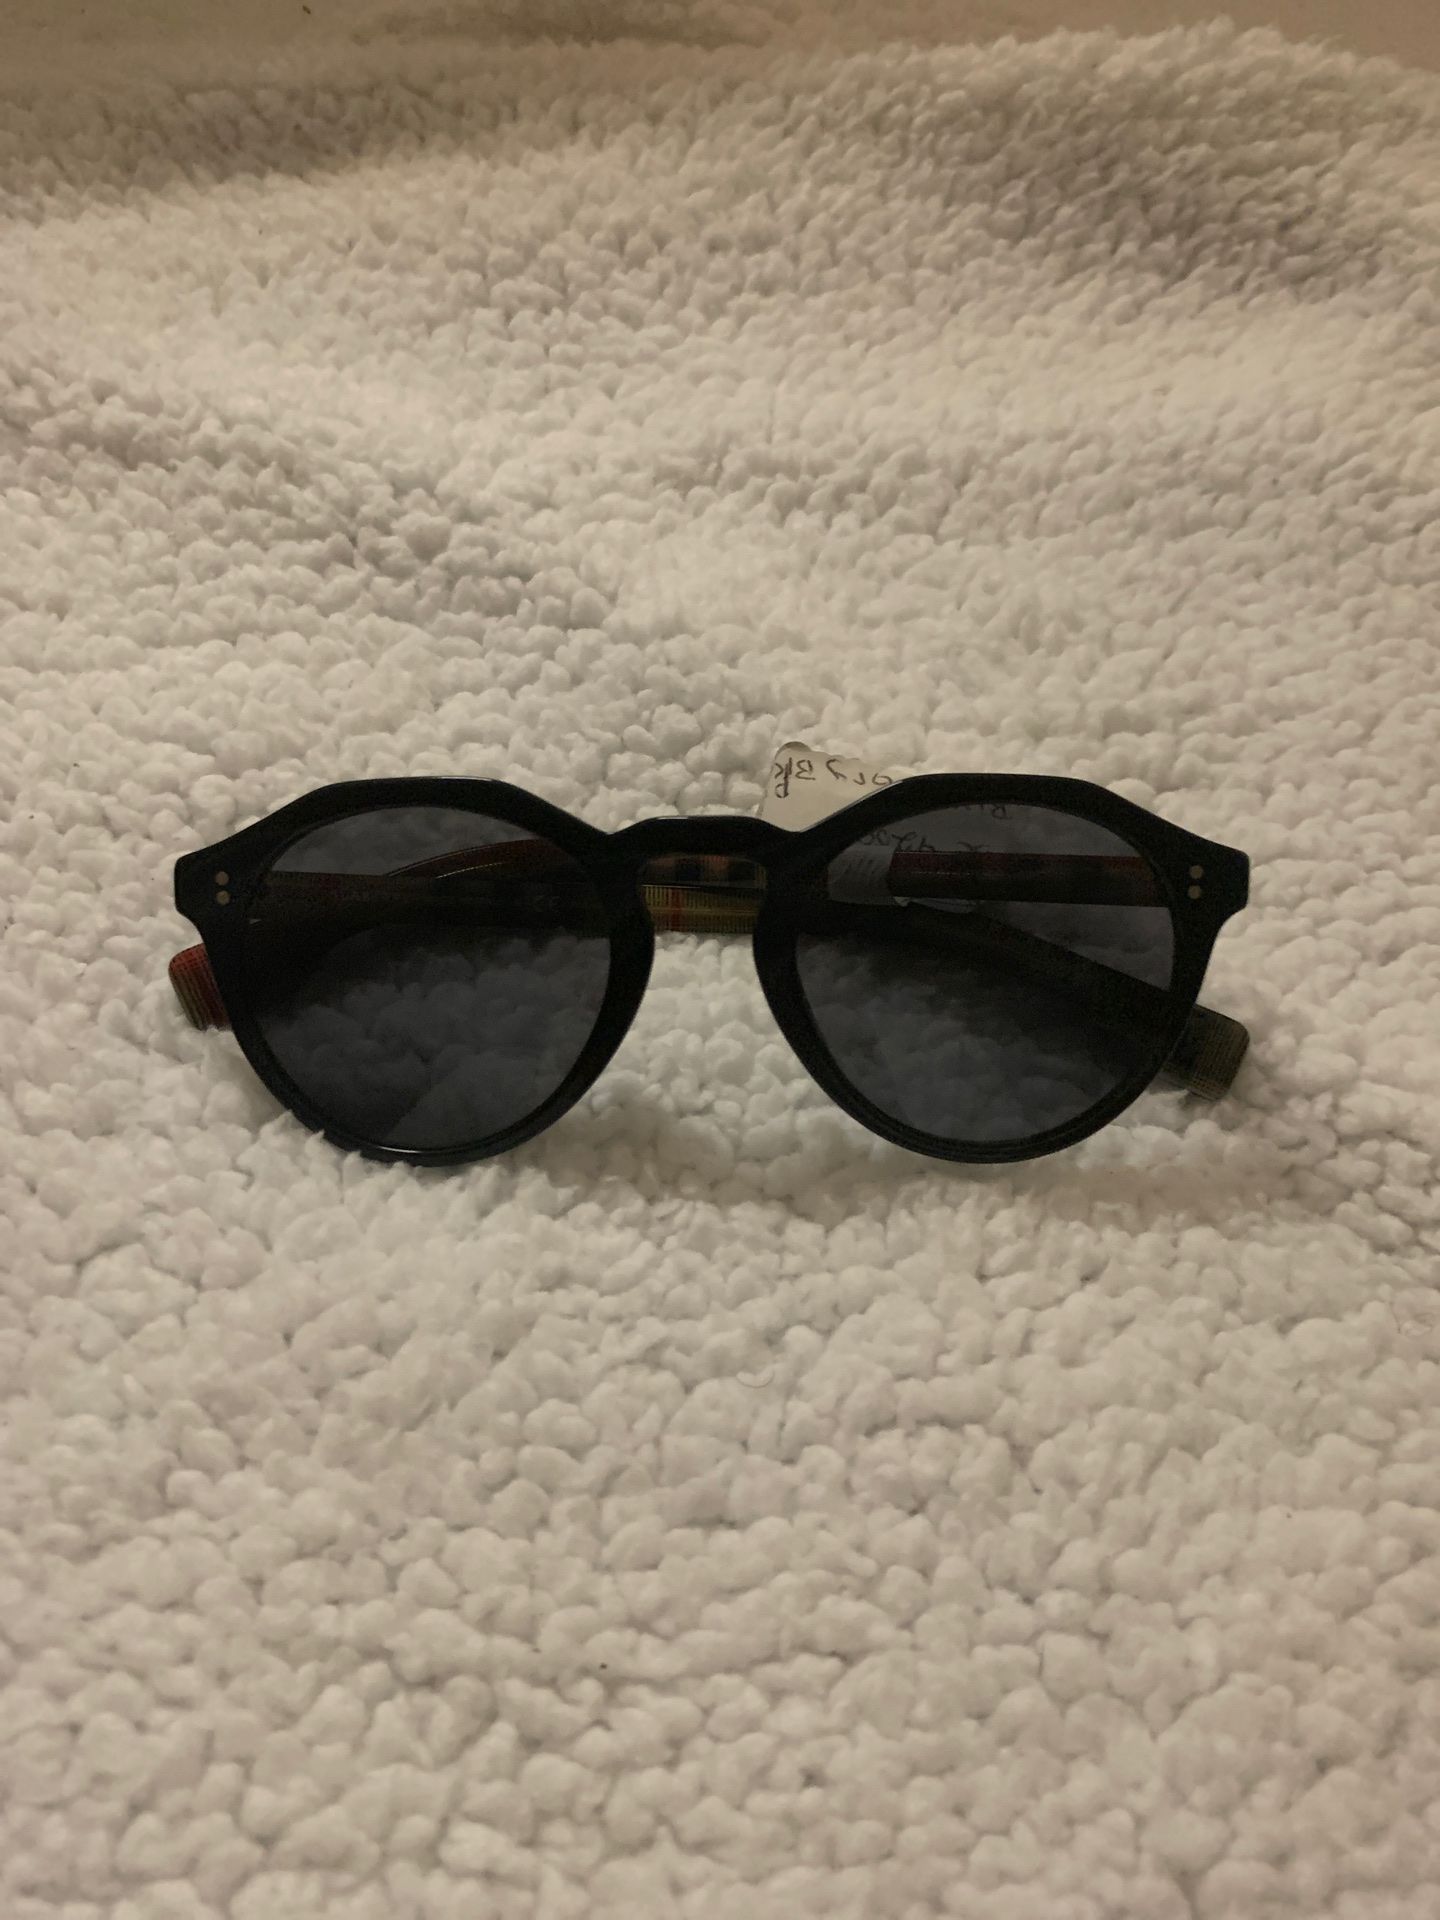 New Authentic Burberry Sunglasses